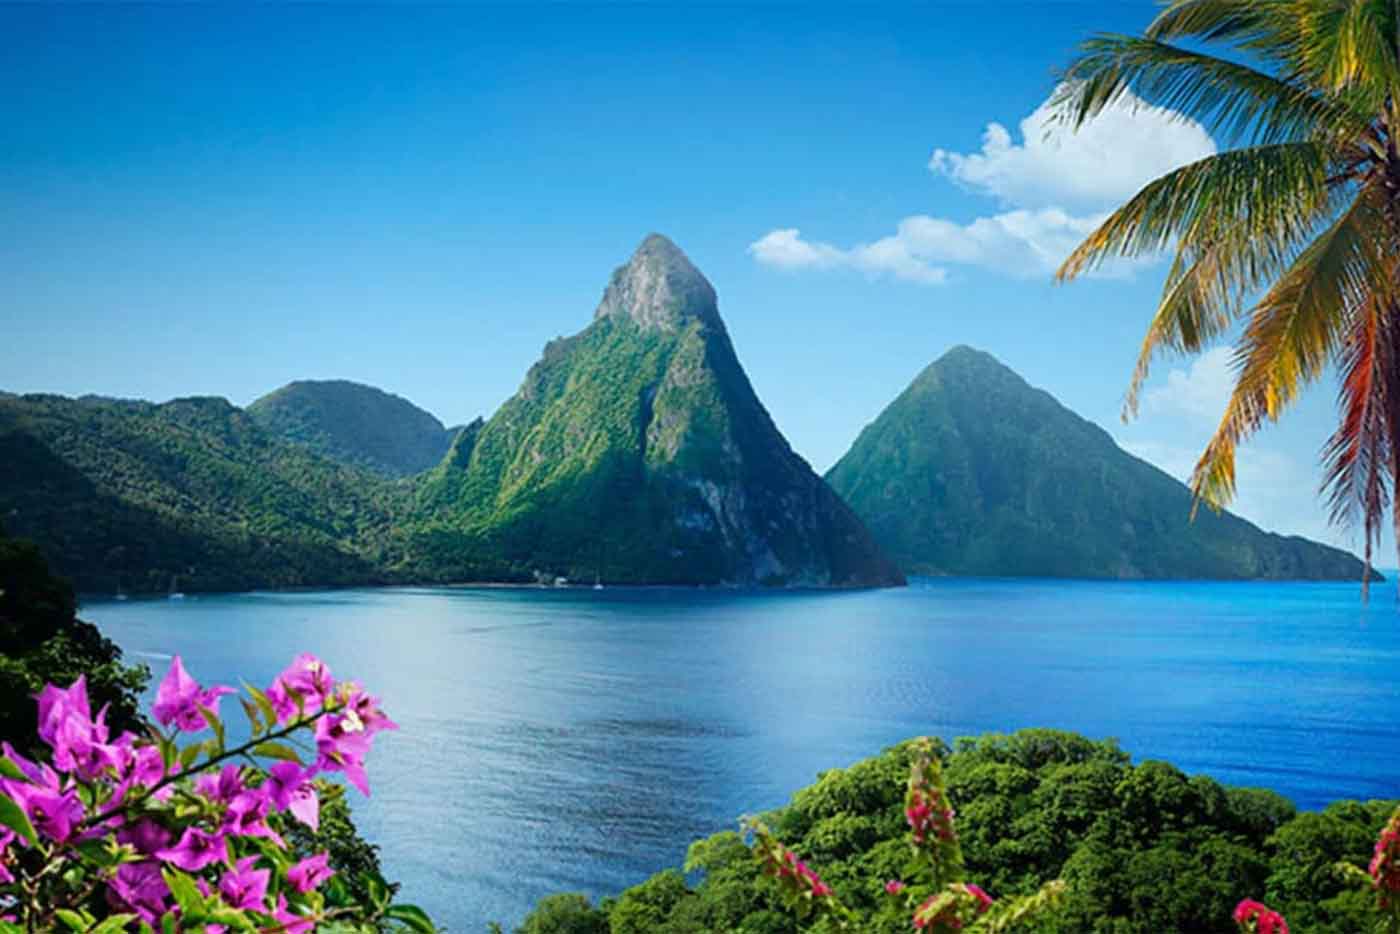 Image of St Lucia island